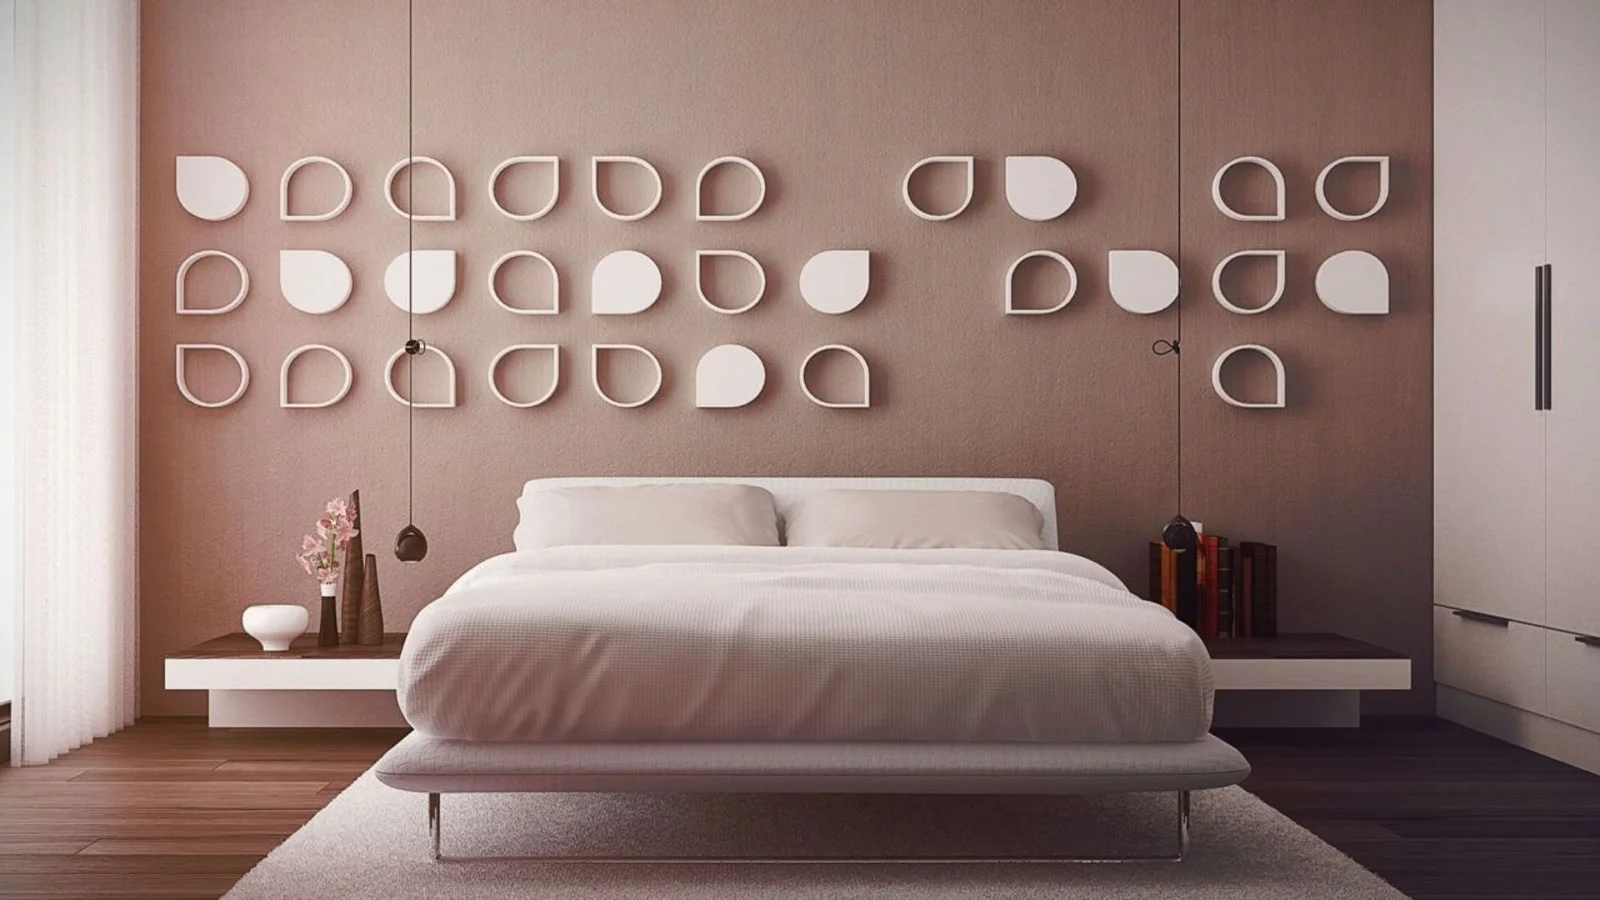 A beige minimalist bedroom décor